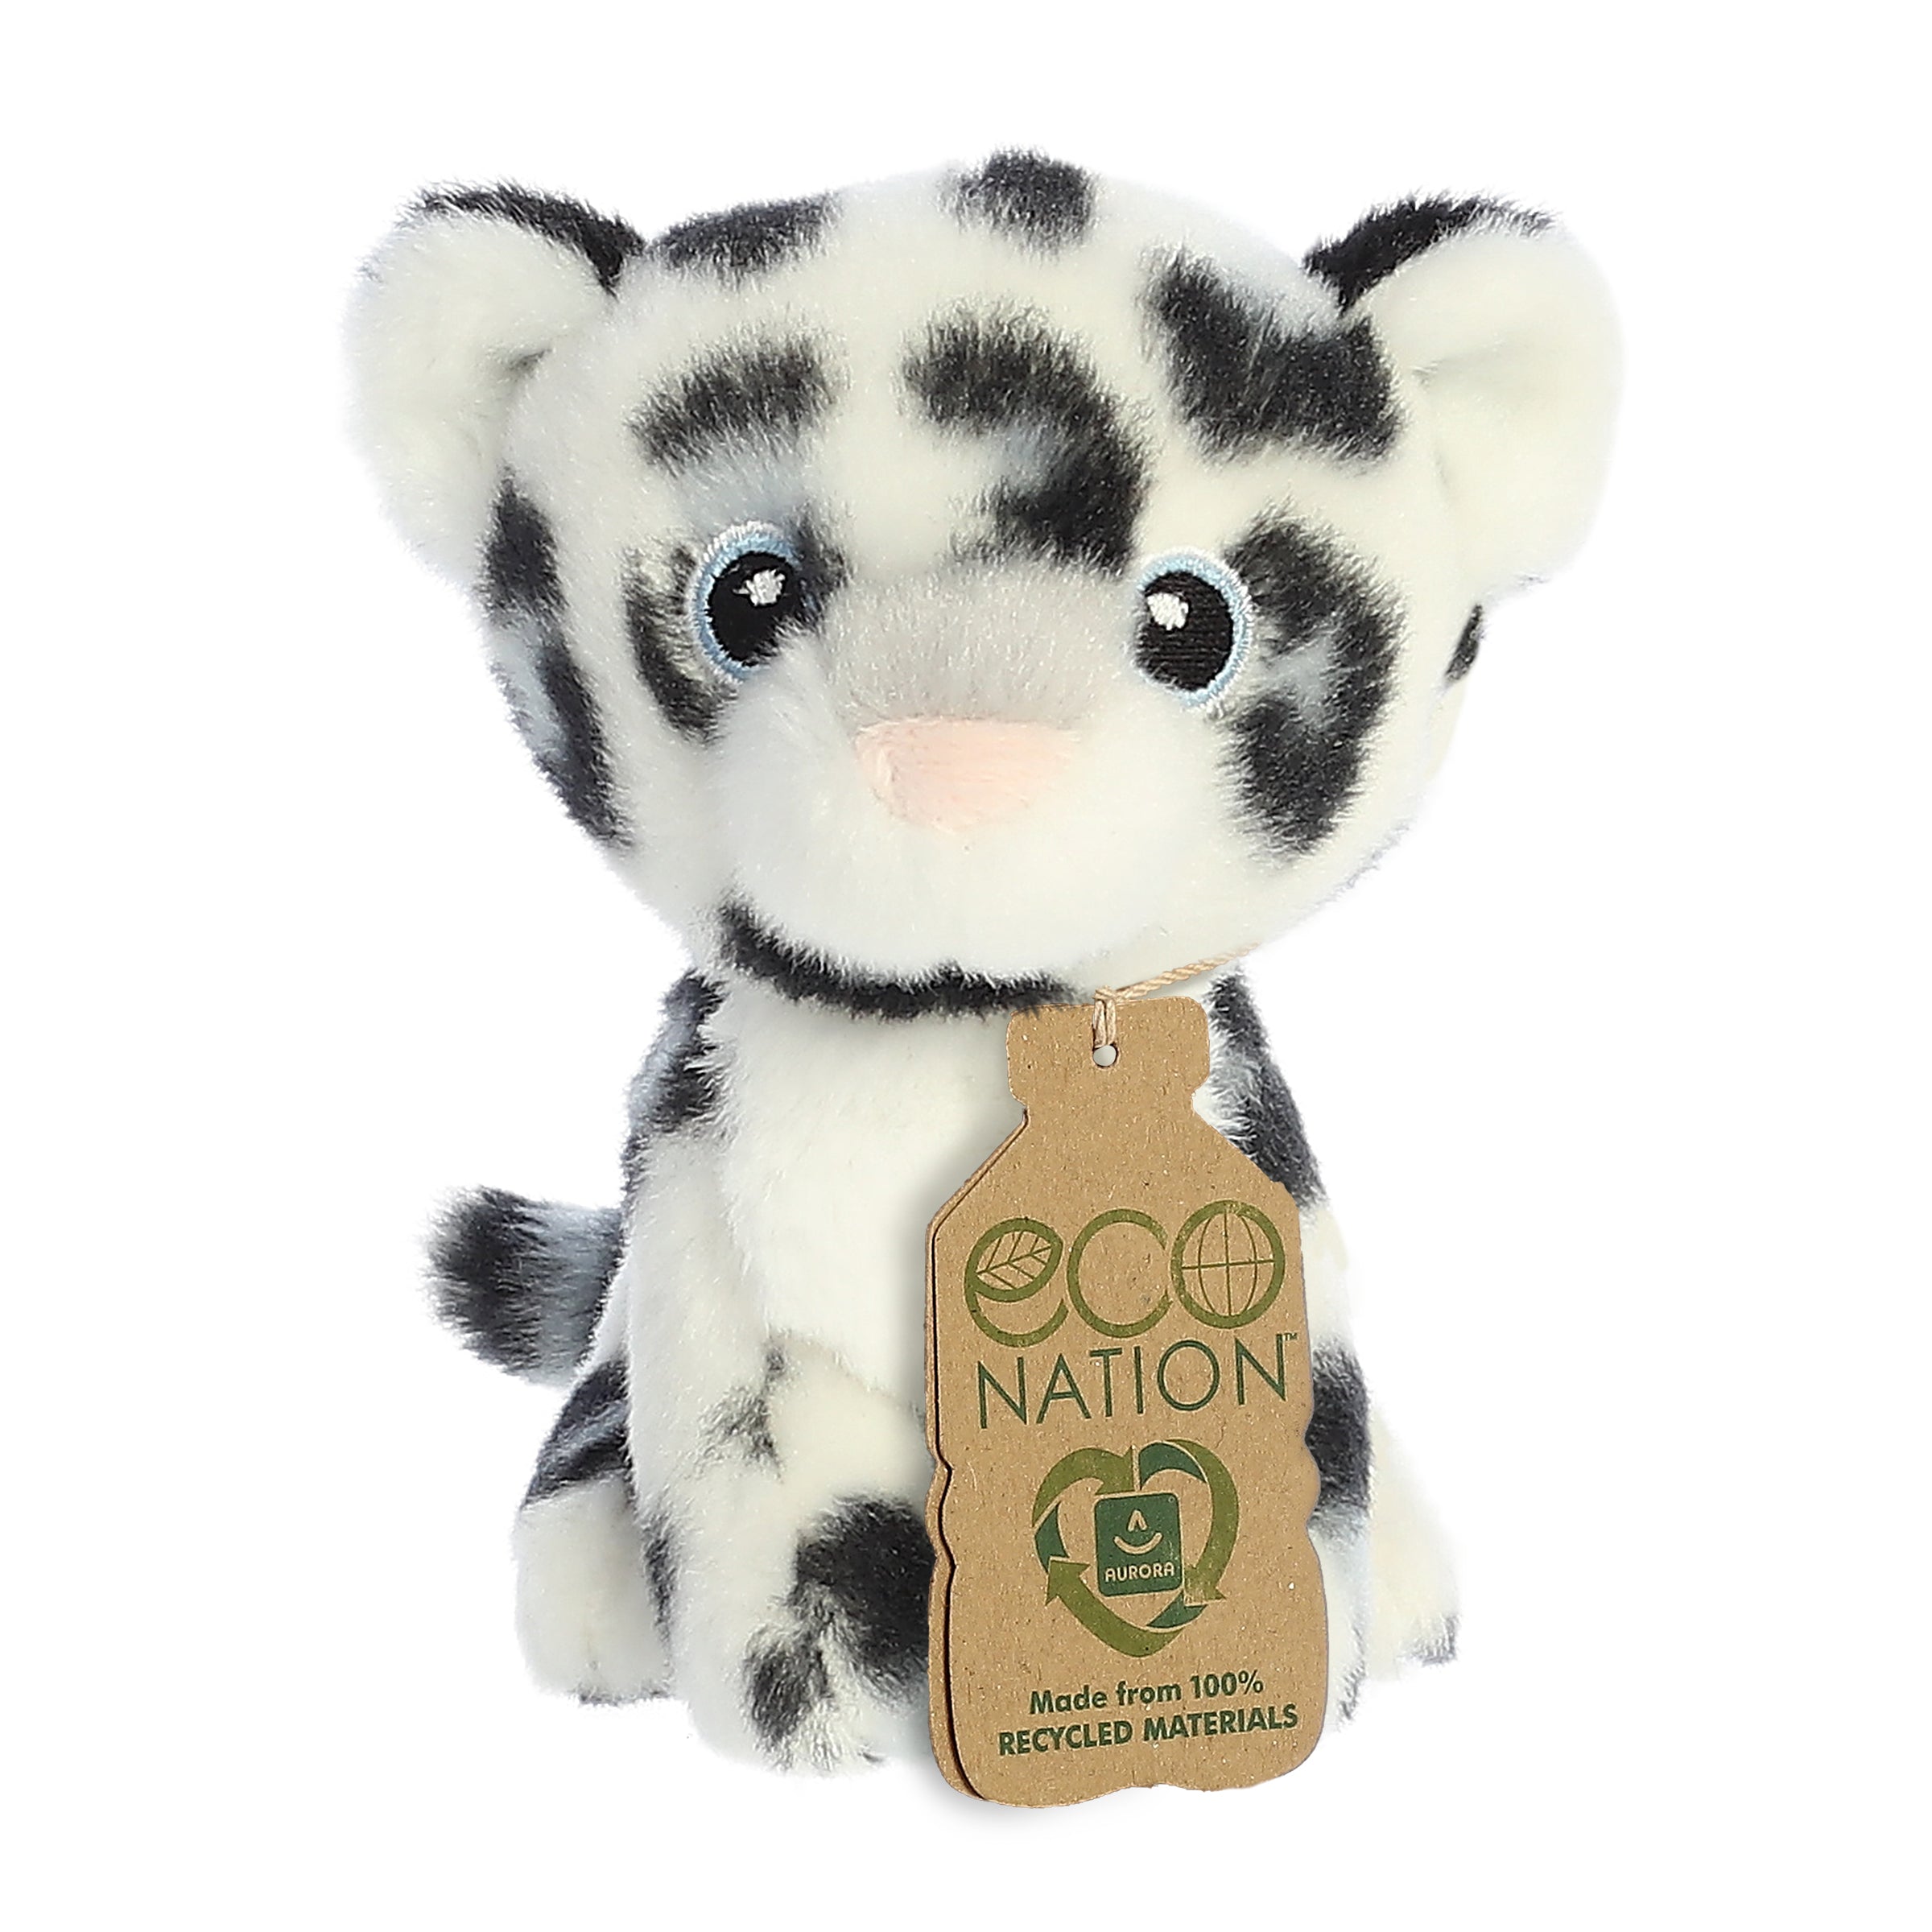 Snow Leopard Ã¢â‚¬â€œ Charming Eco-Nation Stuffed Animals Ã¢â‚¬â€œ Aurora